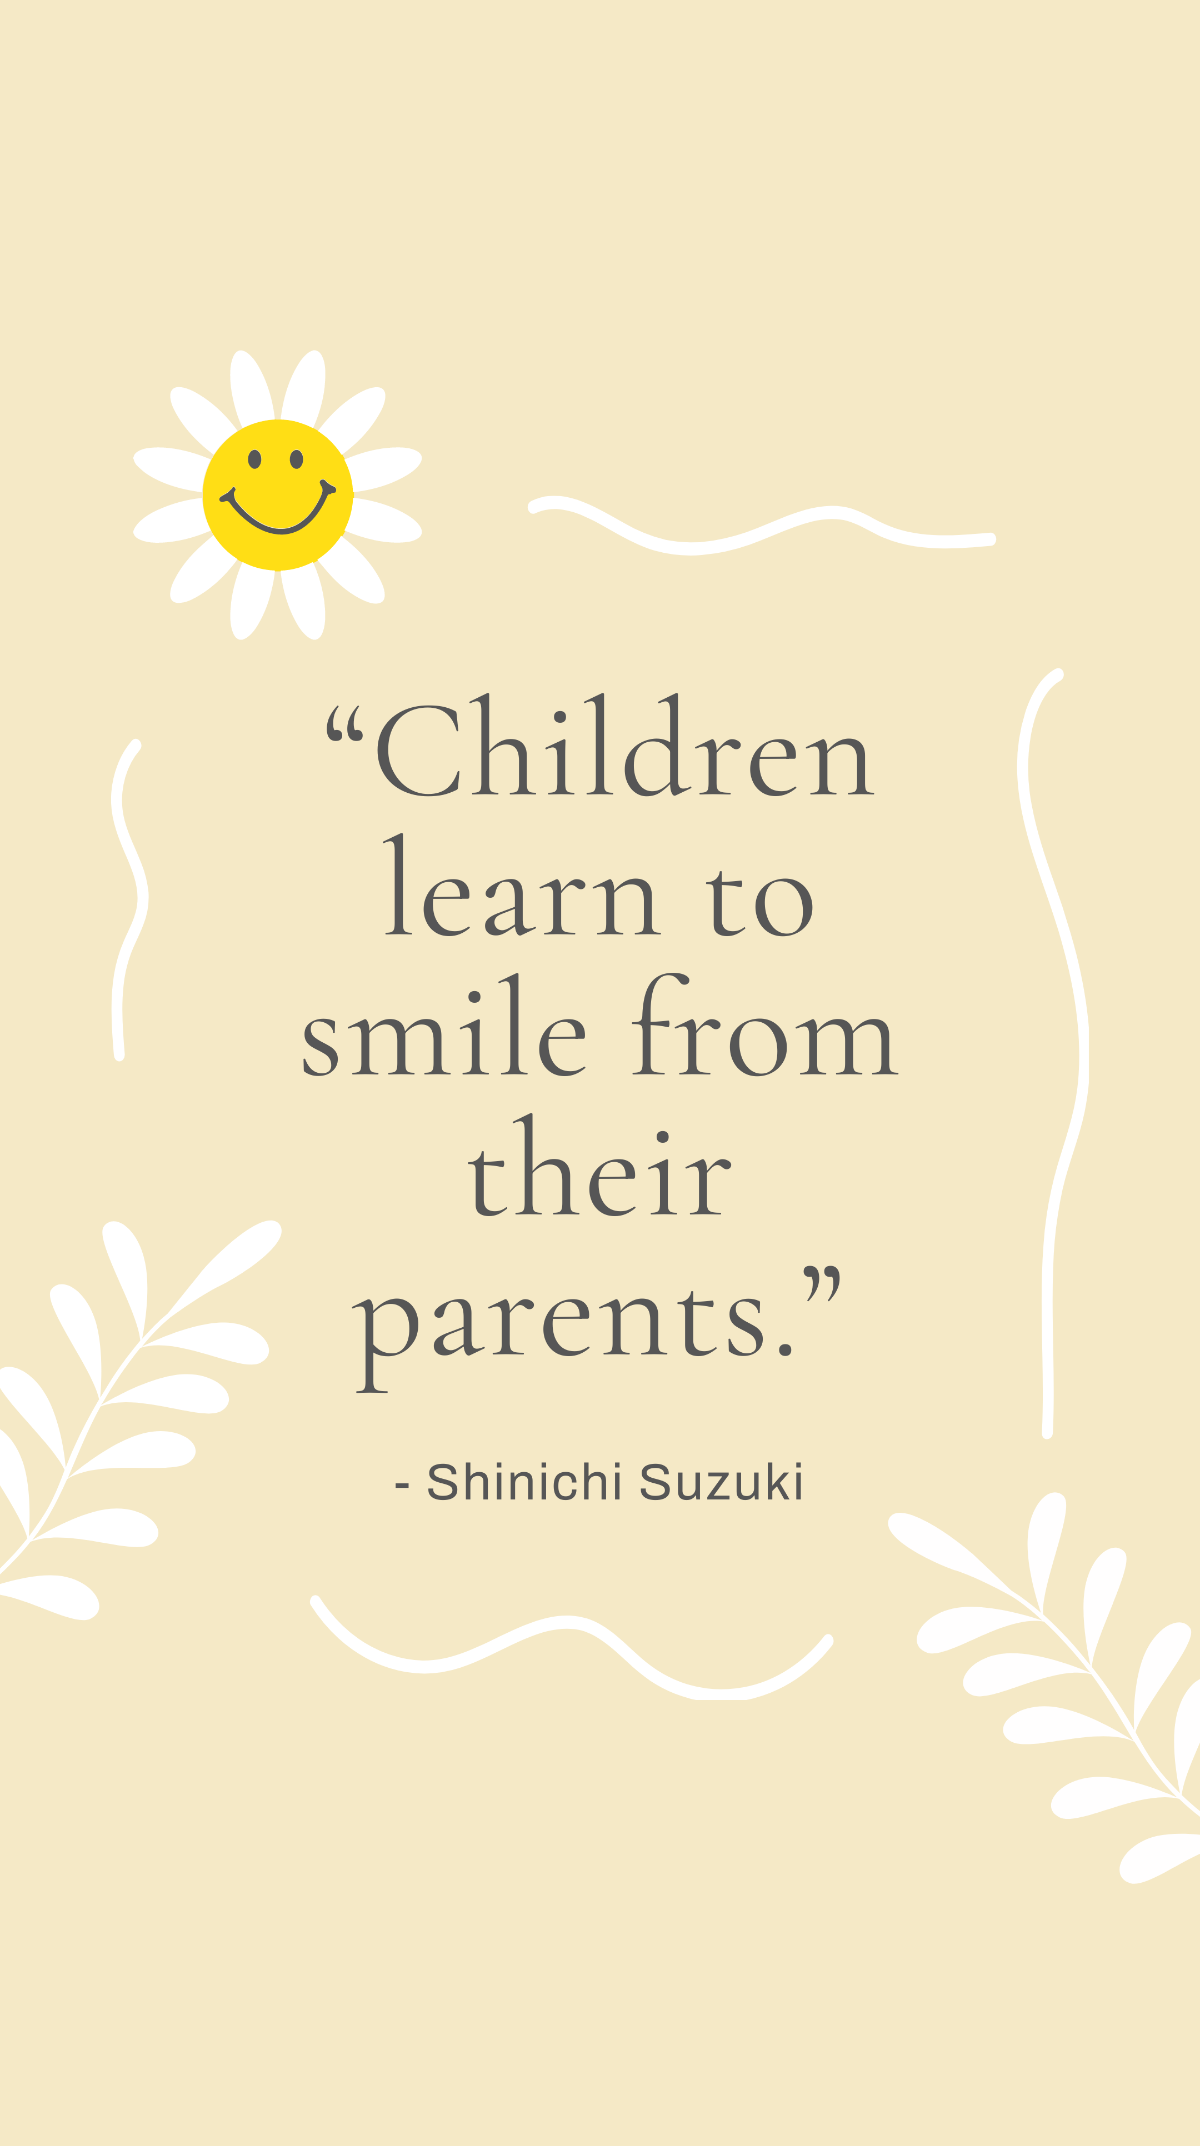 Shinichi Suzuki - “Children learn to smile from their parents.” Template